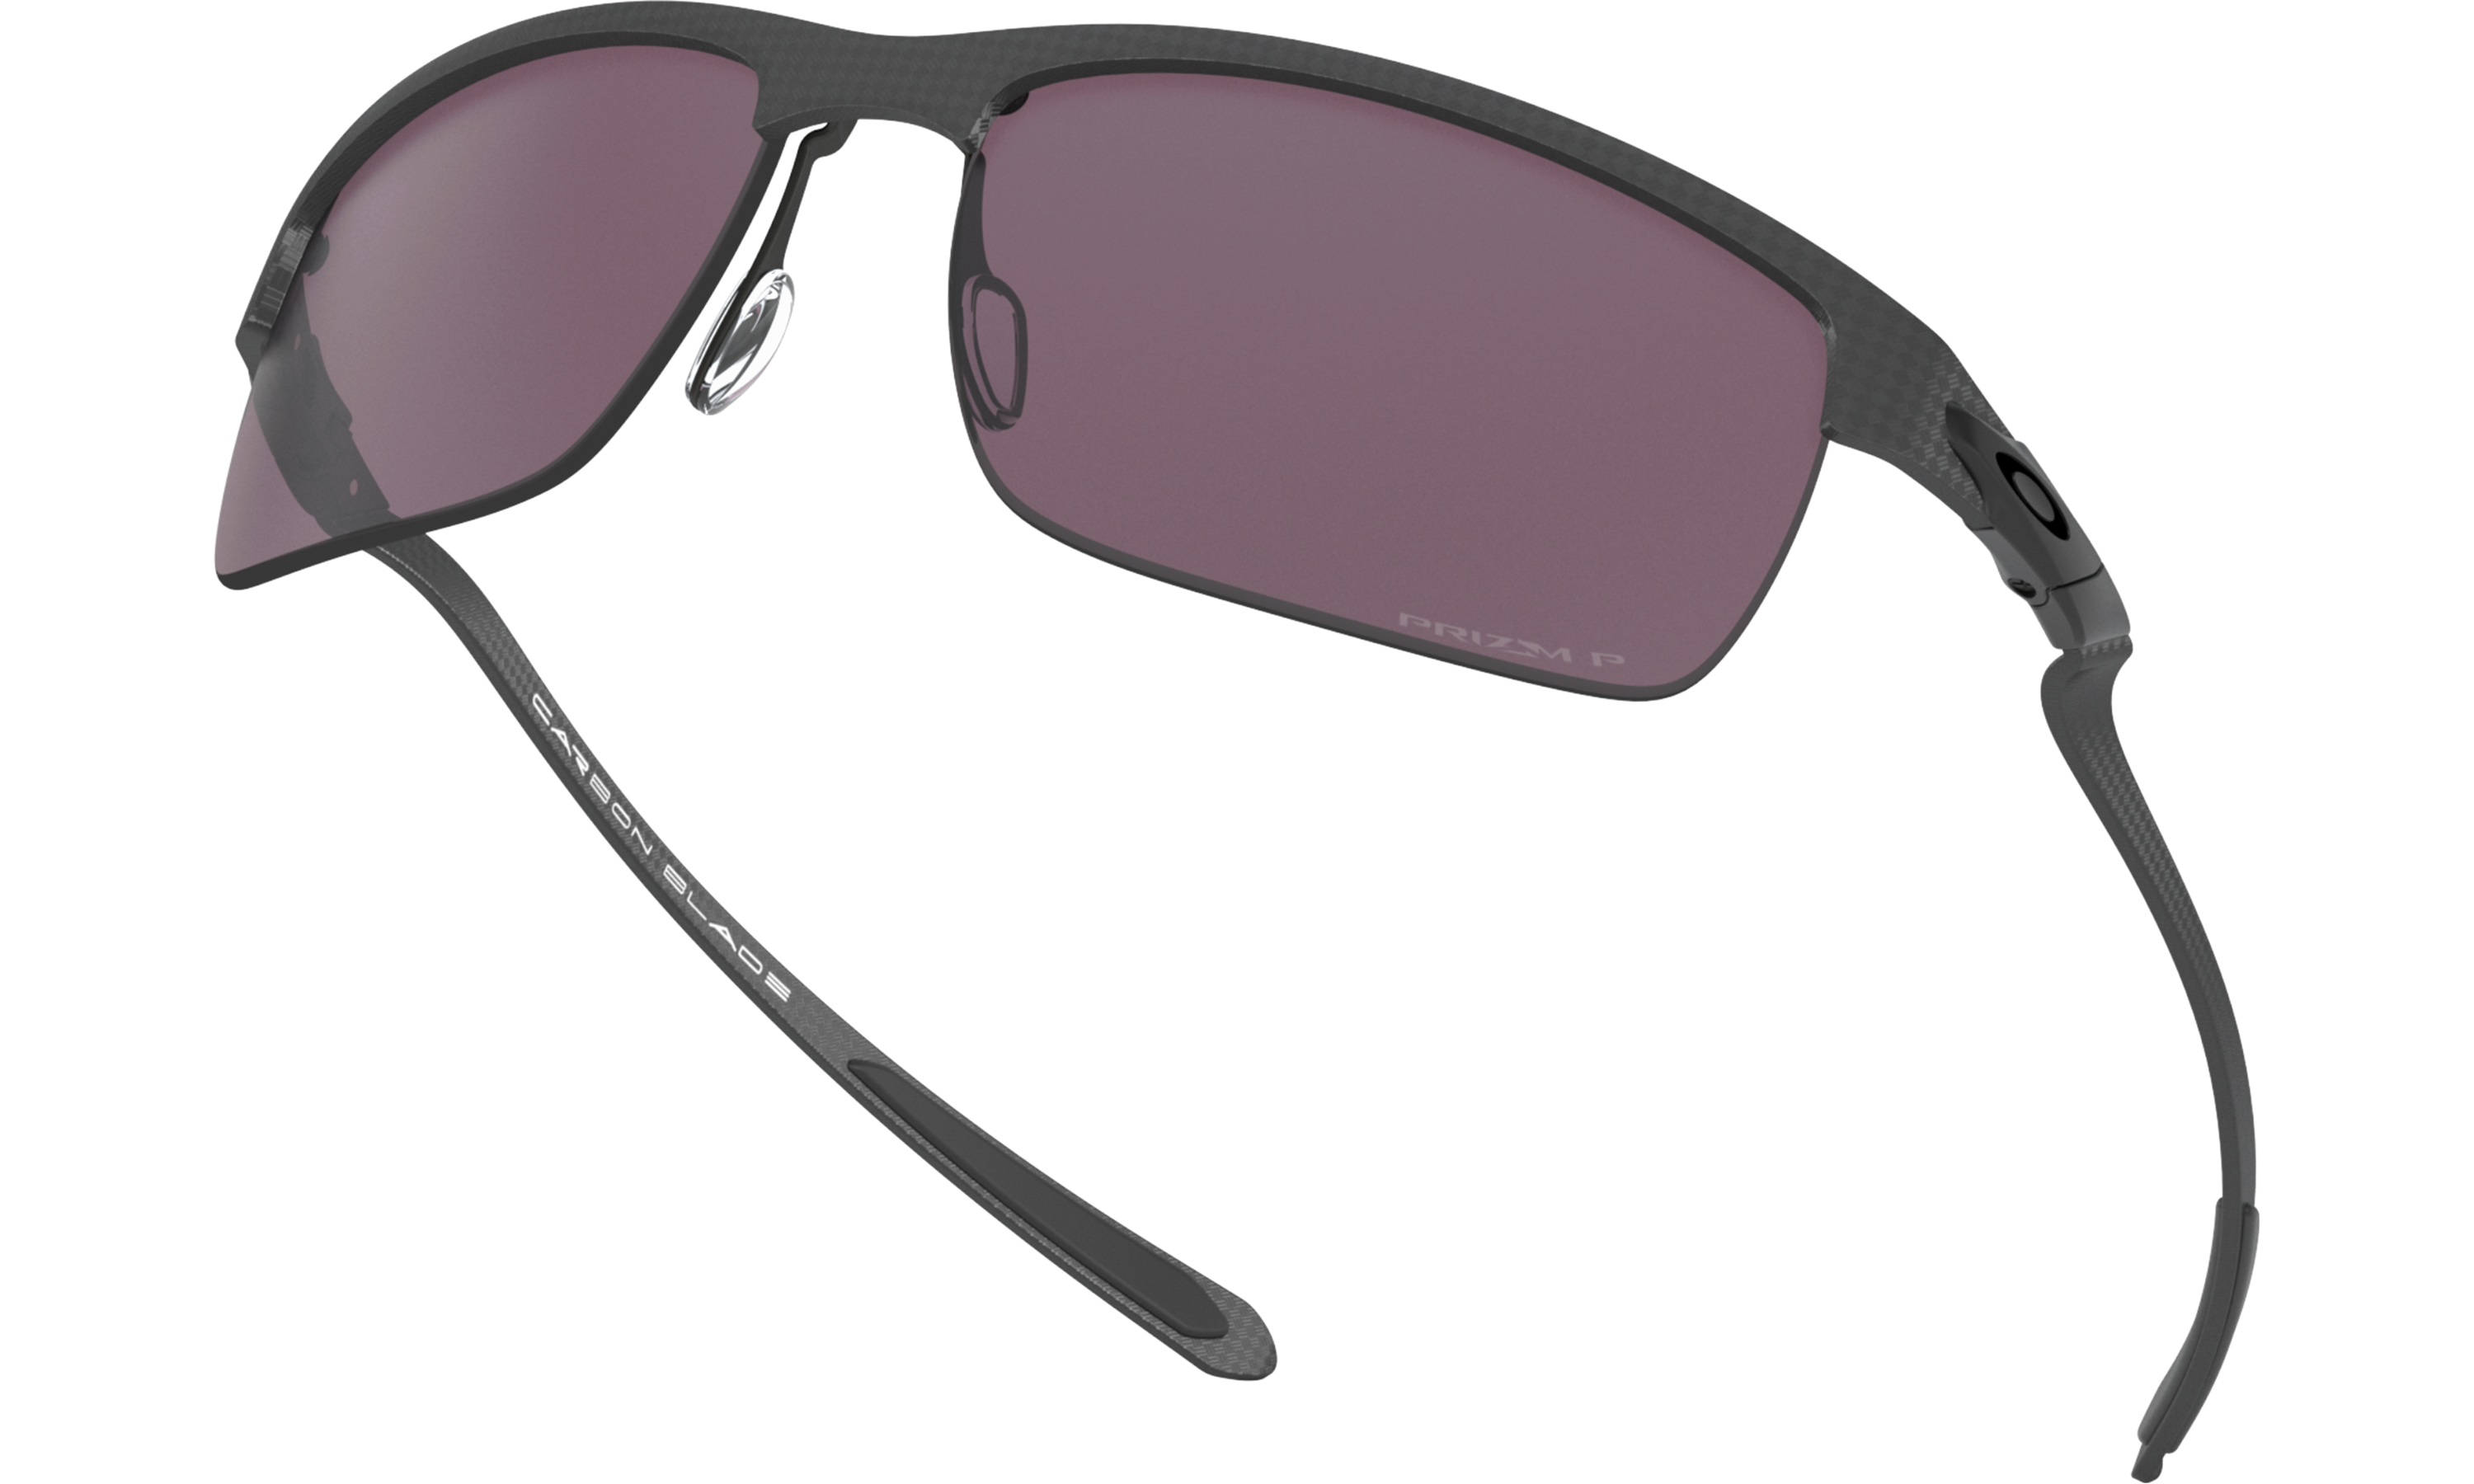 blade 2 oakley sunglasses